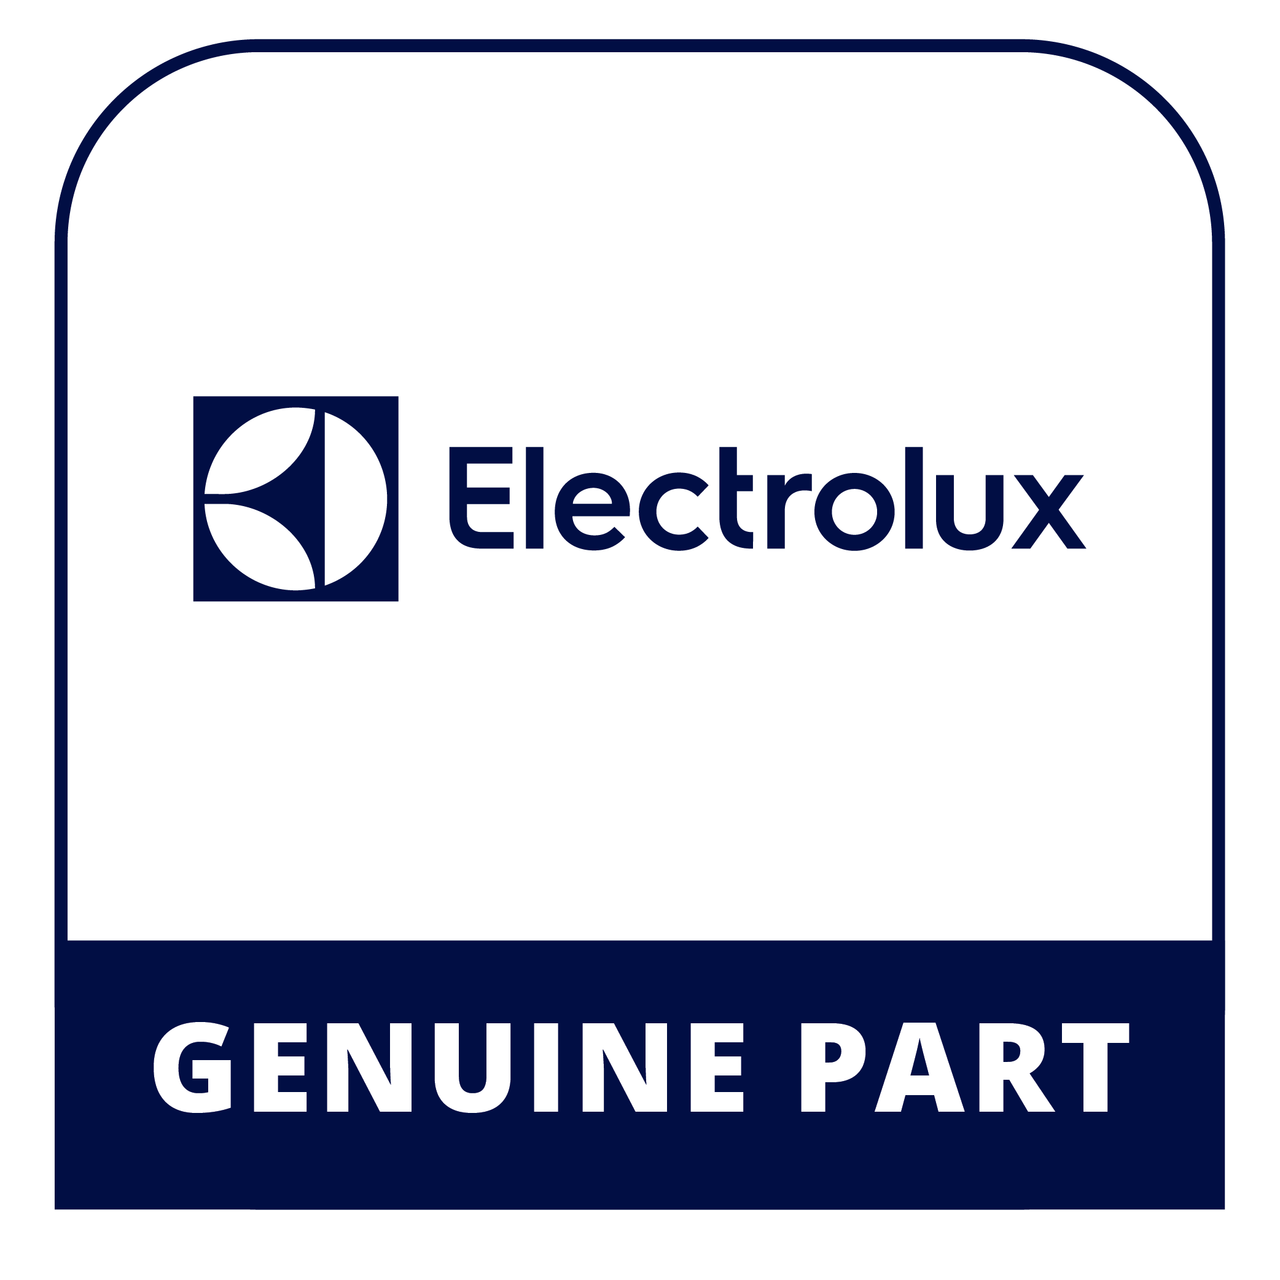 Frigidaire - Electrolux 316570422 Board - Genuine Electrolux Part